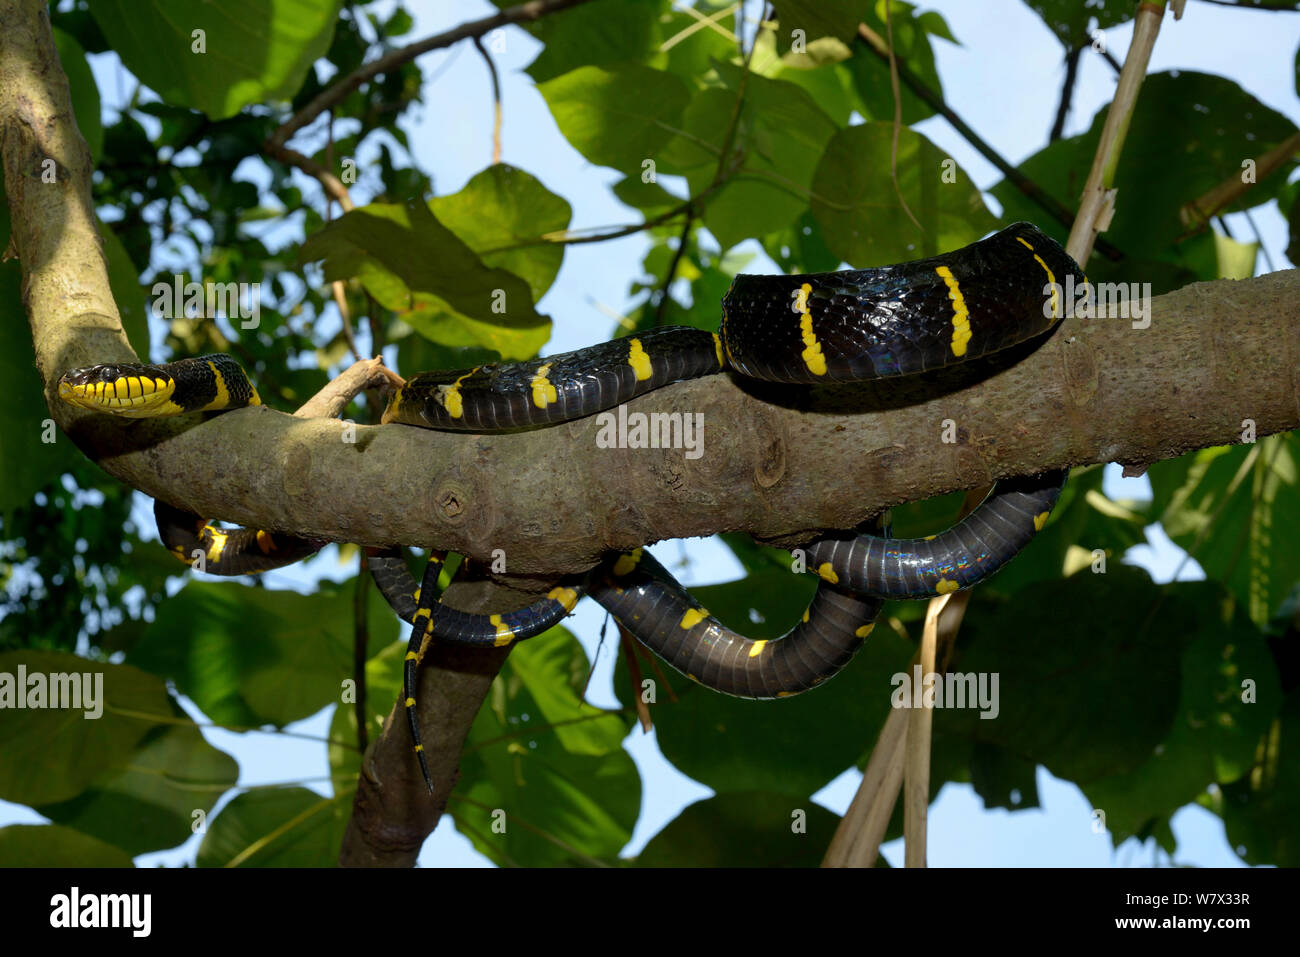 Gold-ringed cat snake (Boiga dendrophila dendrophila) in tree, Malaysia Stock Photo